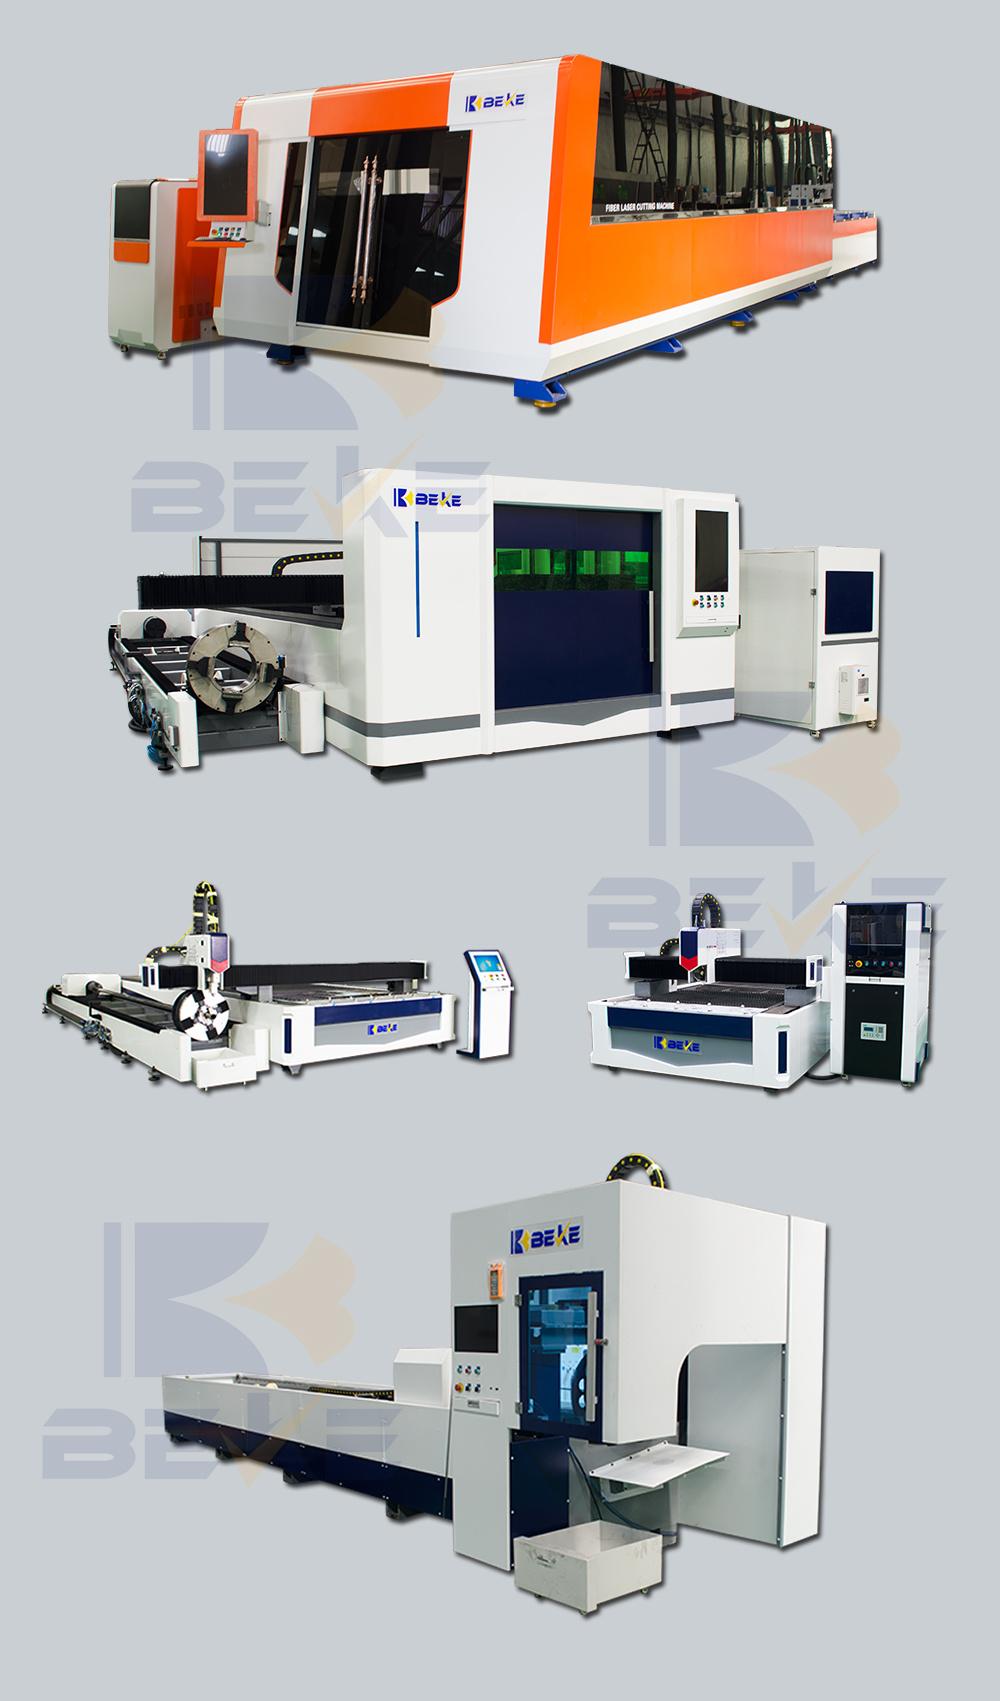 Beke Best Selling 6000mm Length Closed Type Tube Pipe CNC Fiber Laser Cutting Machine